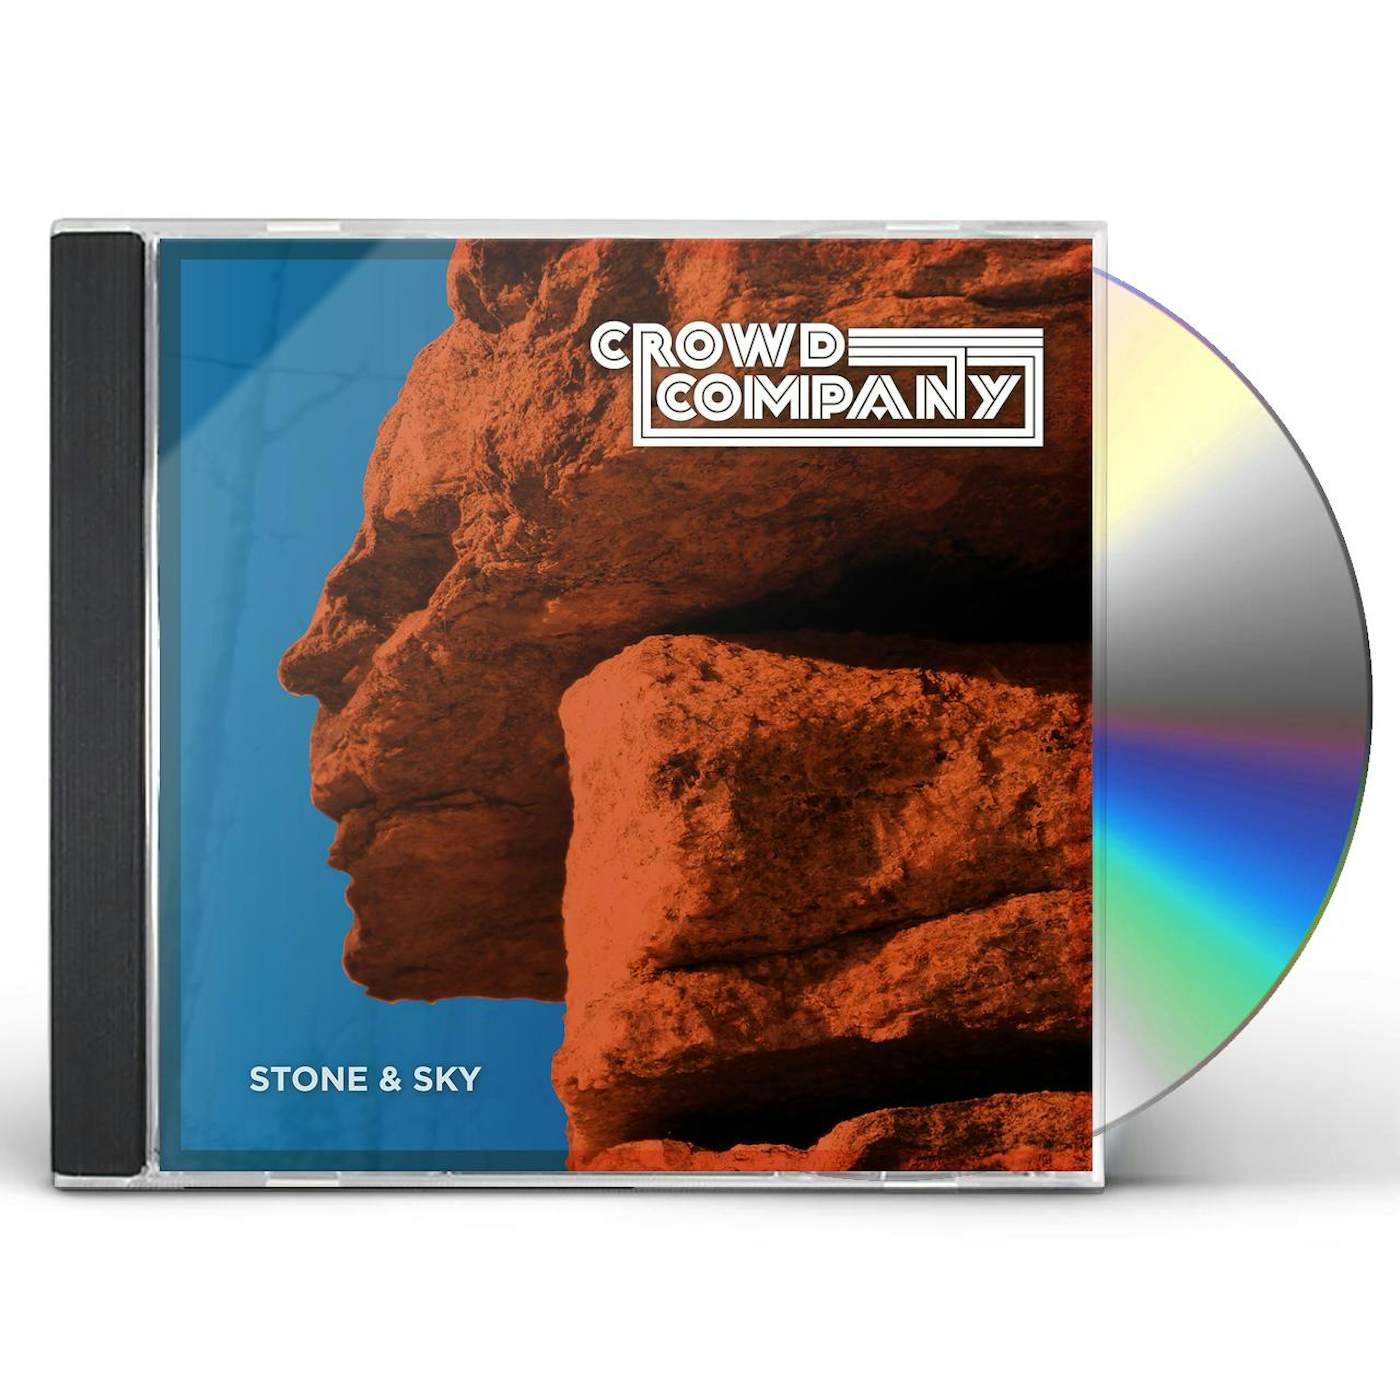 Crowd Company STONE & SKY CD